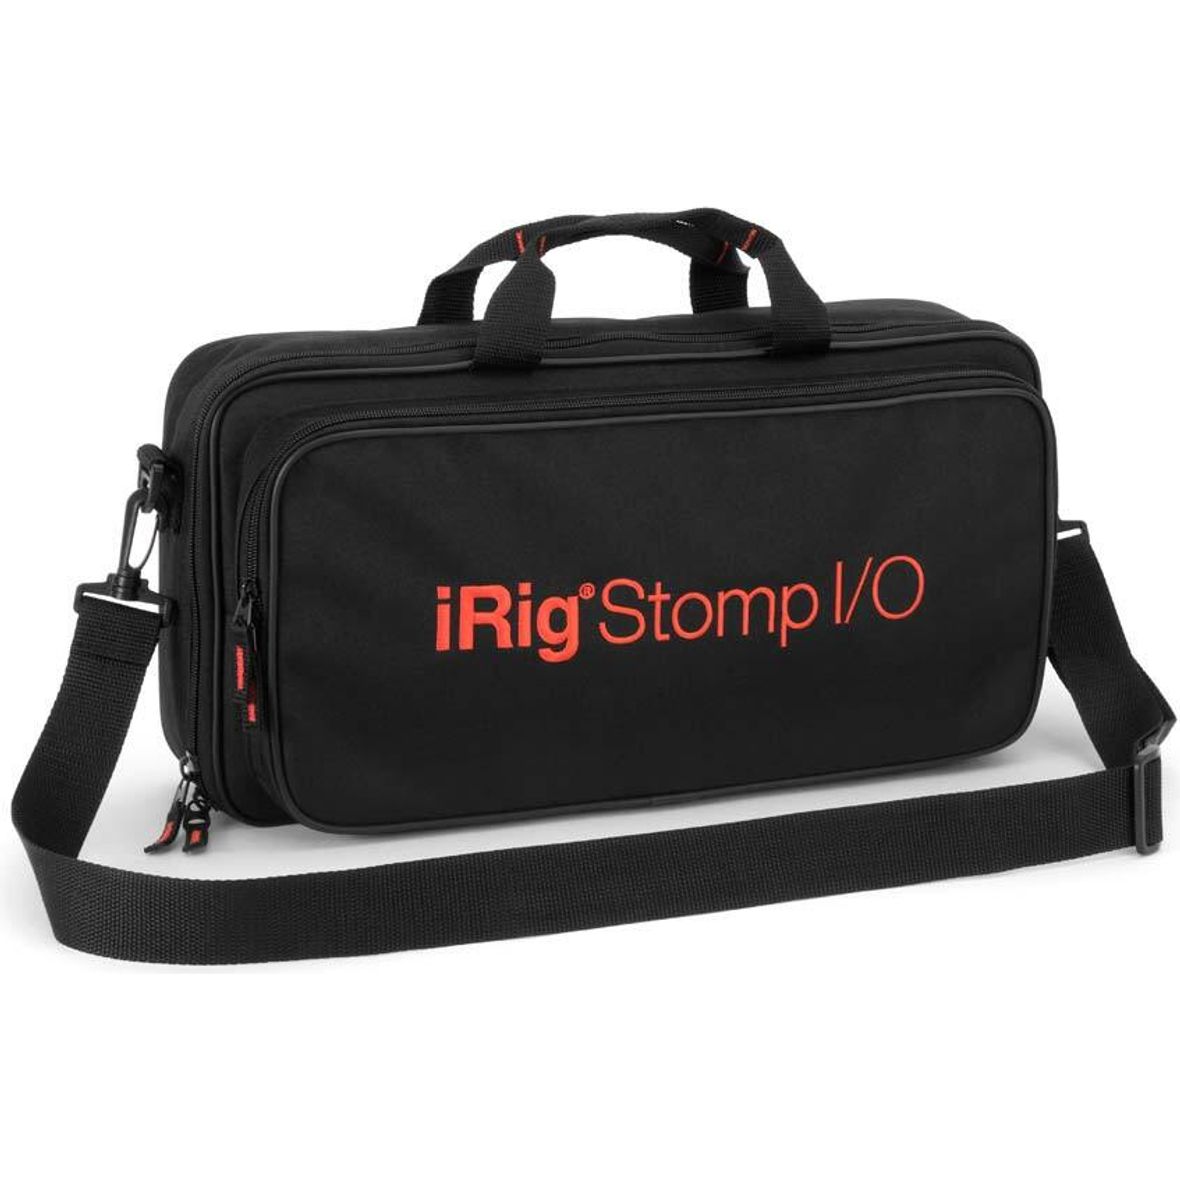 IK Multimedia Travel Bag for iRig Stomp I/O